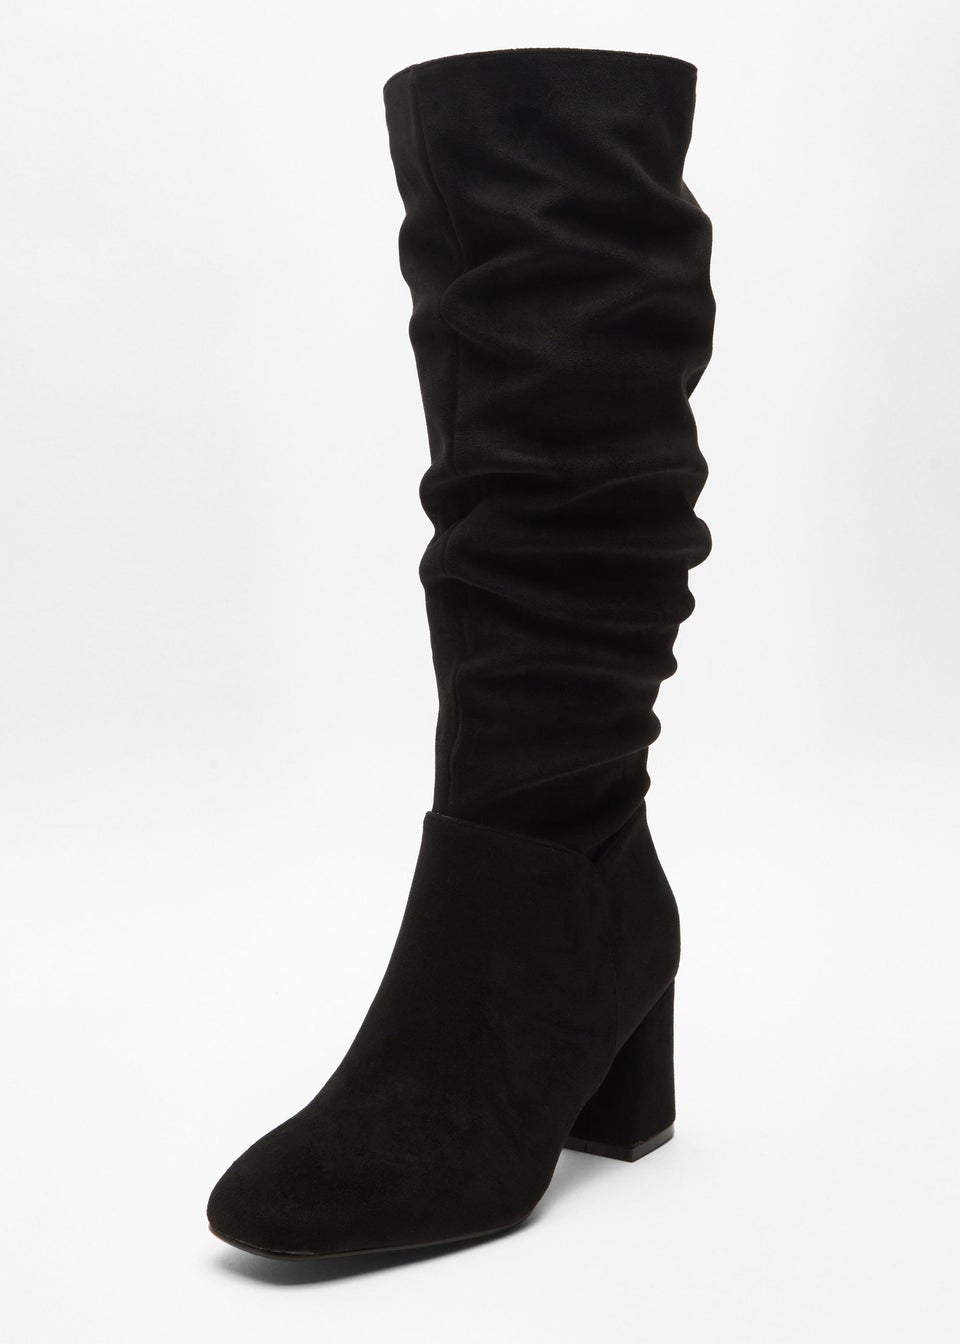 Women's heels boots - Square heels, stilettos, high heels - Cinelle Paris